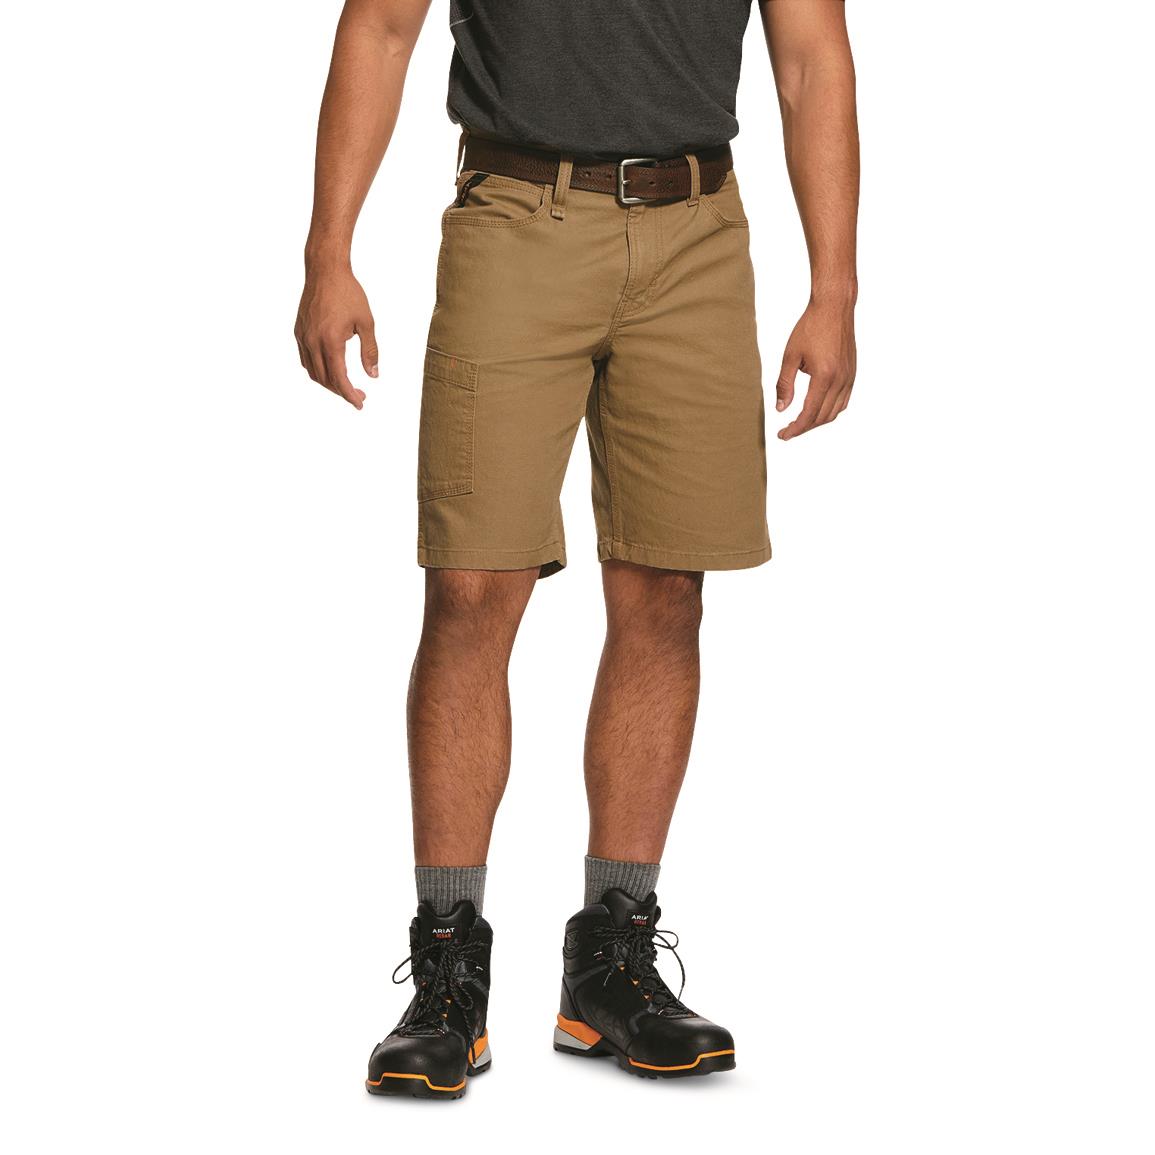 Ariat Men's Rebar Relaxed Made Tough Durastretch Shorts, Field Khaki